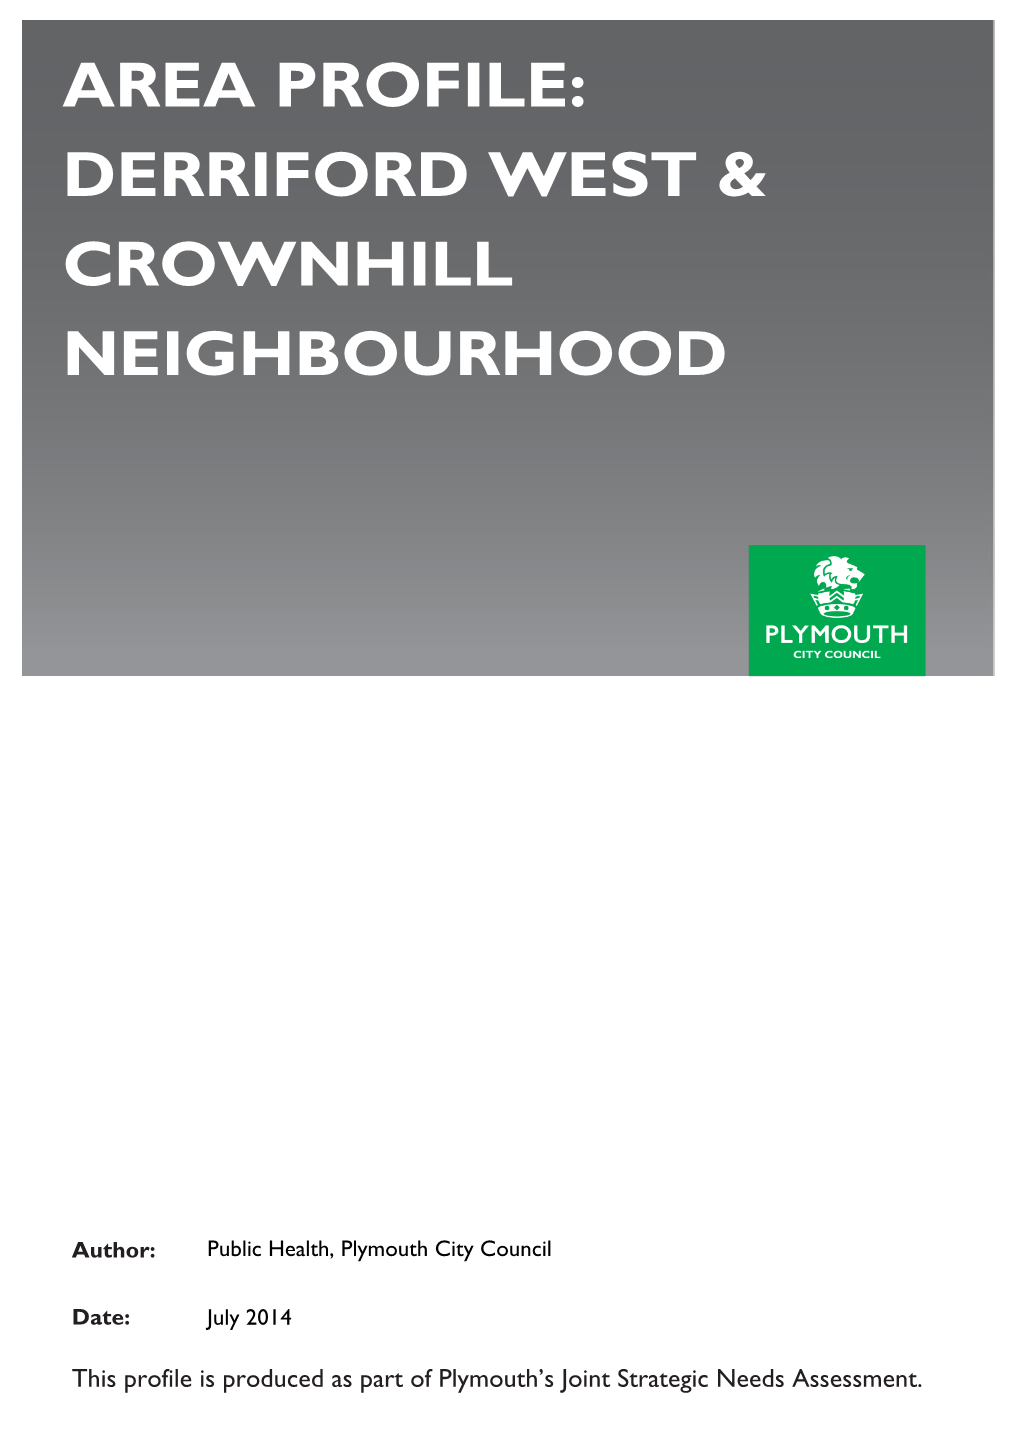 Area Profile: Derriford West & Crownhill Neighbourhood